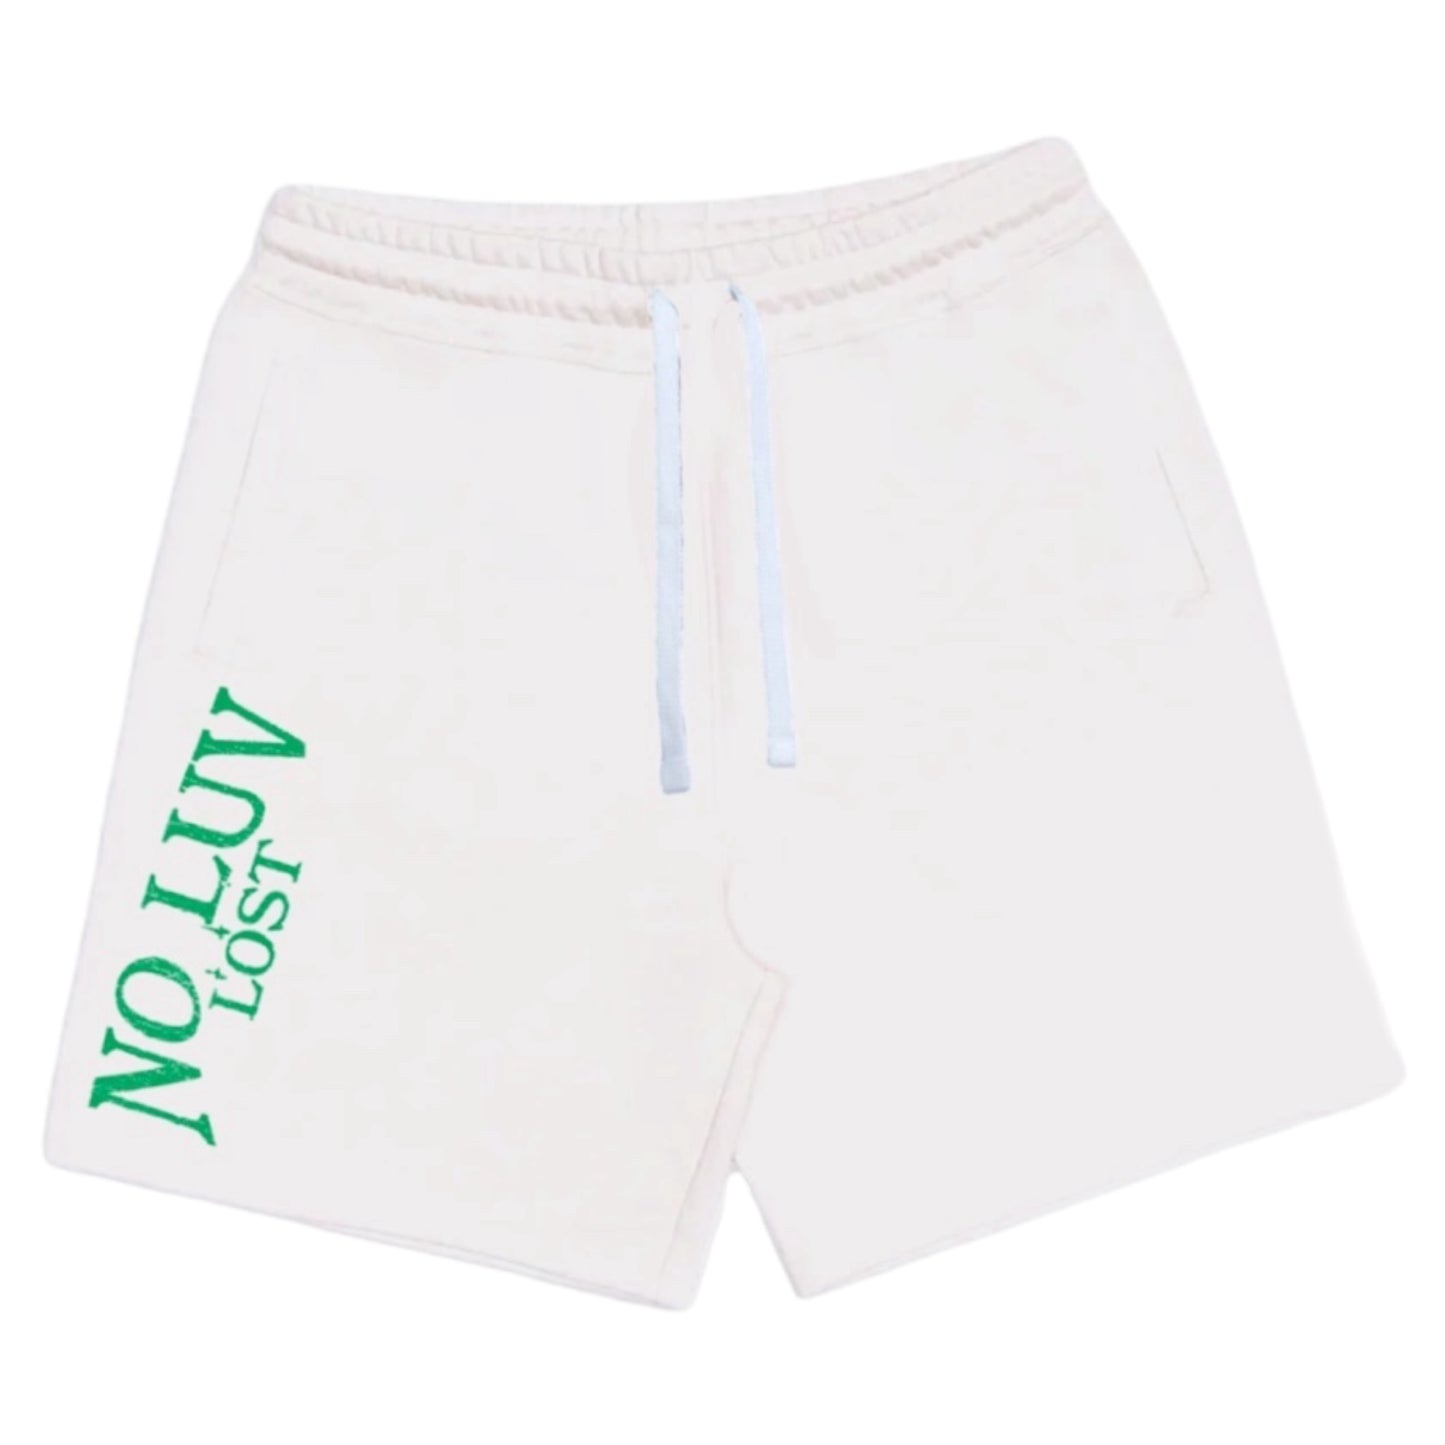 NLL shorts (Emerald Green)